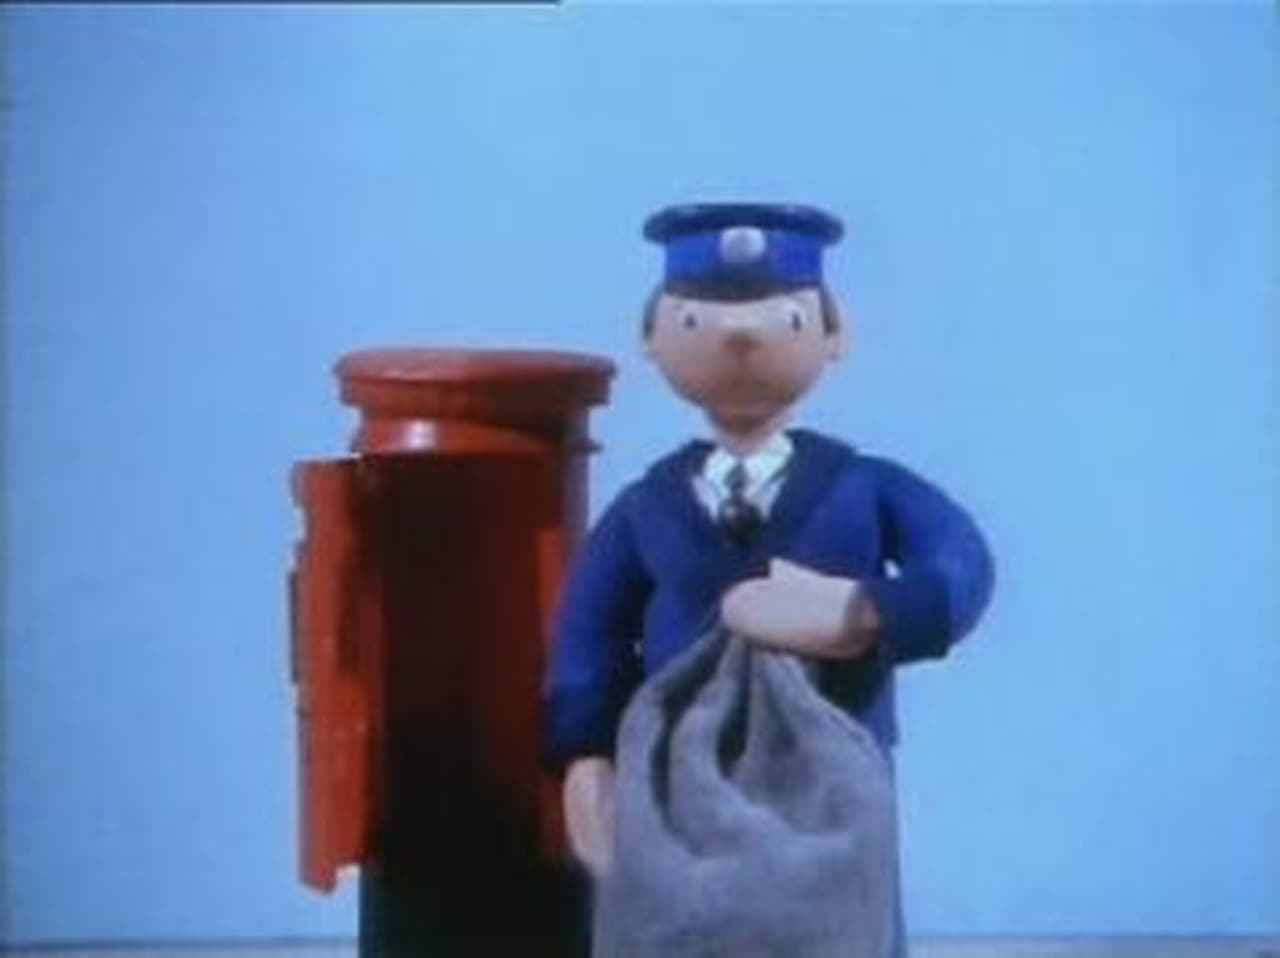 Peter the Postman